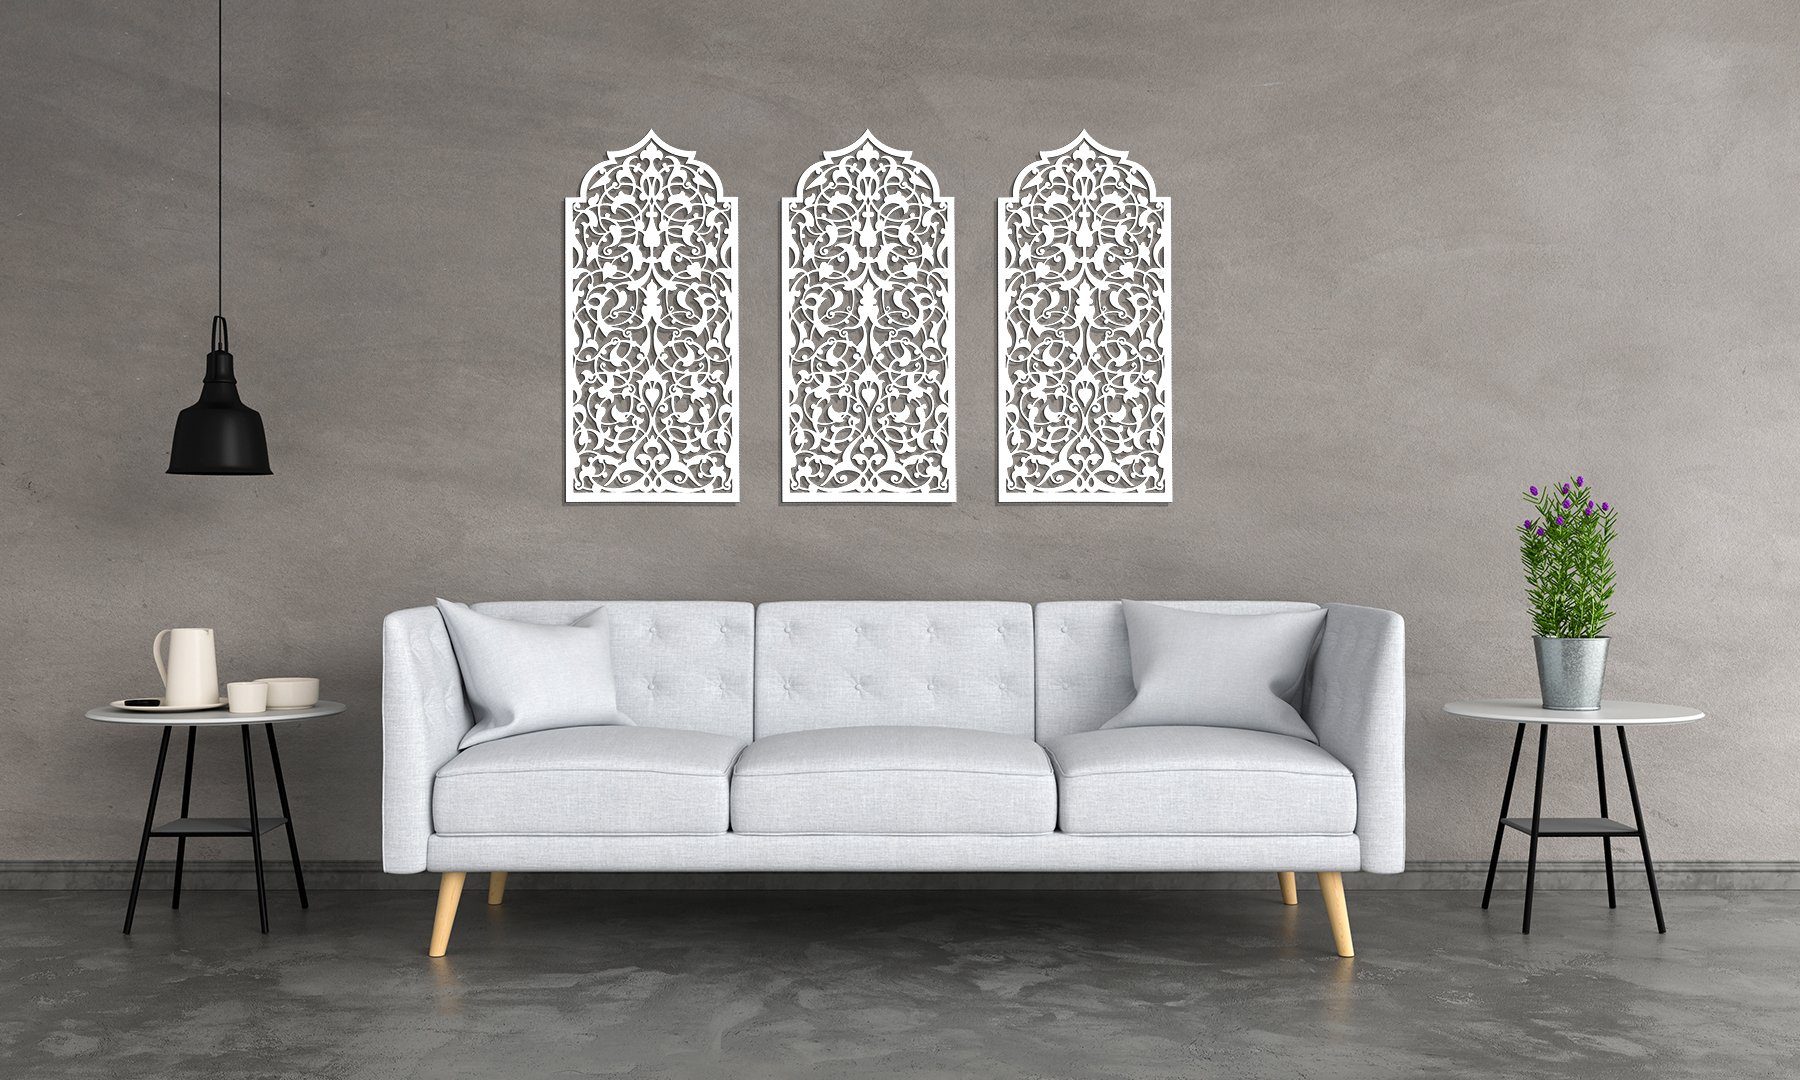 Marokkanisches Wanddekoration, 3D Holzbild Fenster, Wandpaneel, grosse Handwerk ORNAMENTI